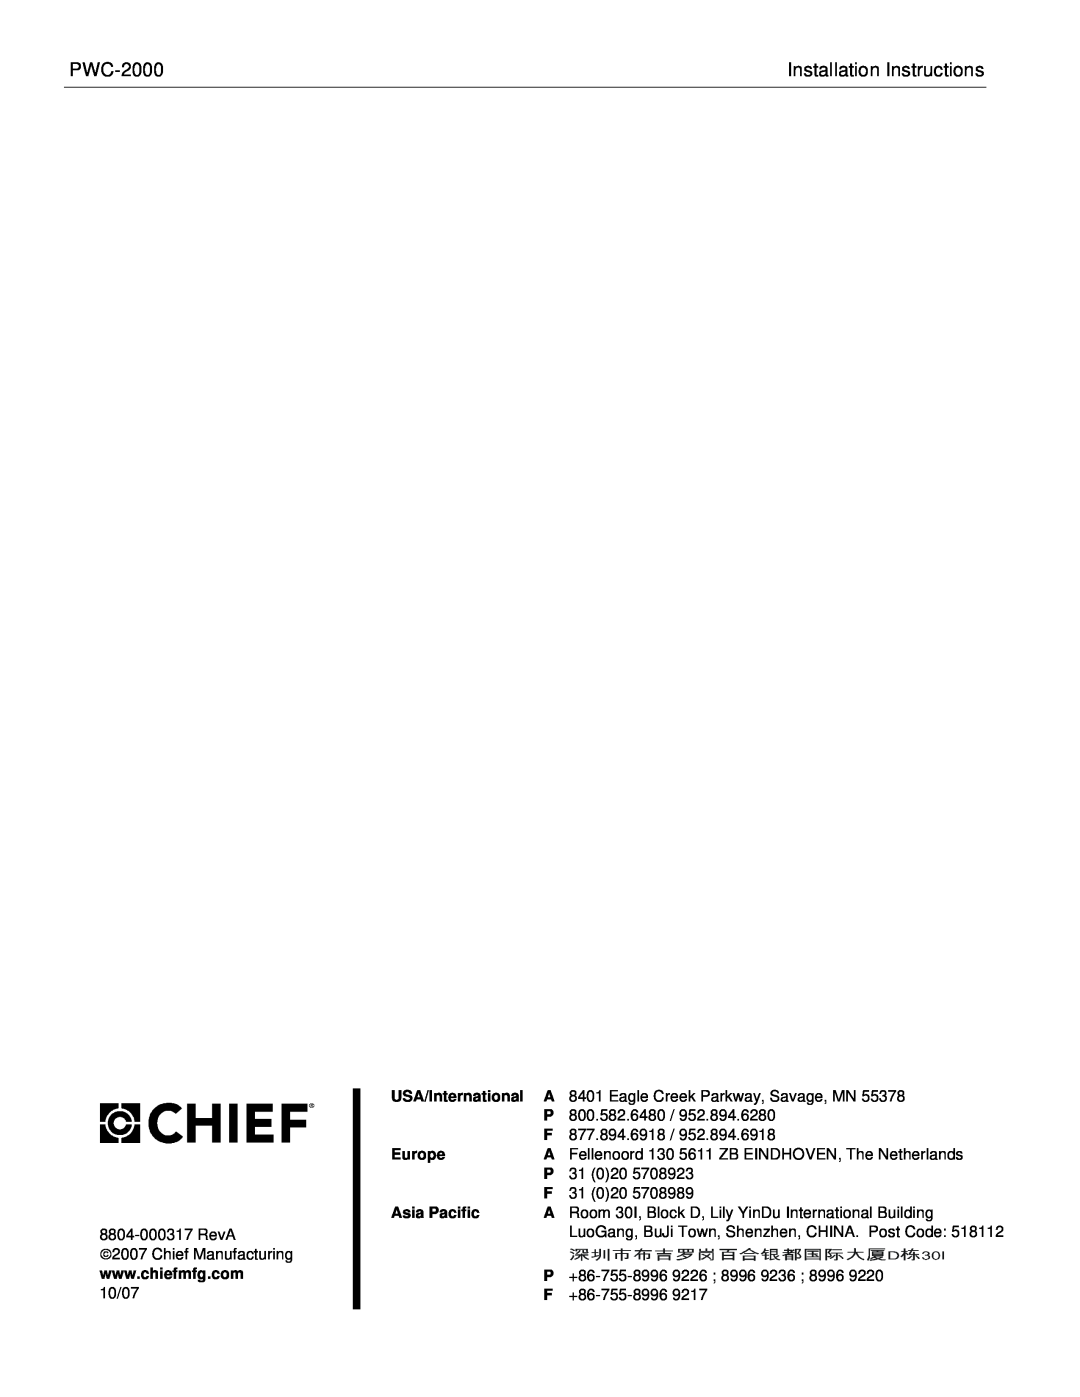 Chief Manufacturing PWC-2000 installation instructions Installation Instructions, USA/International 